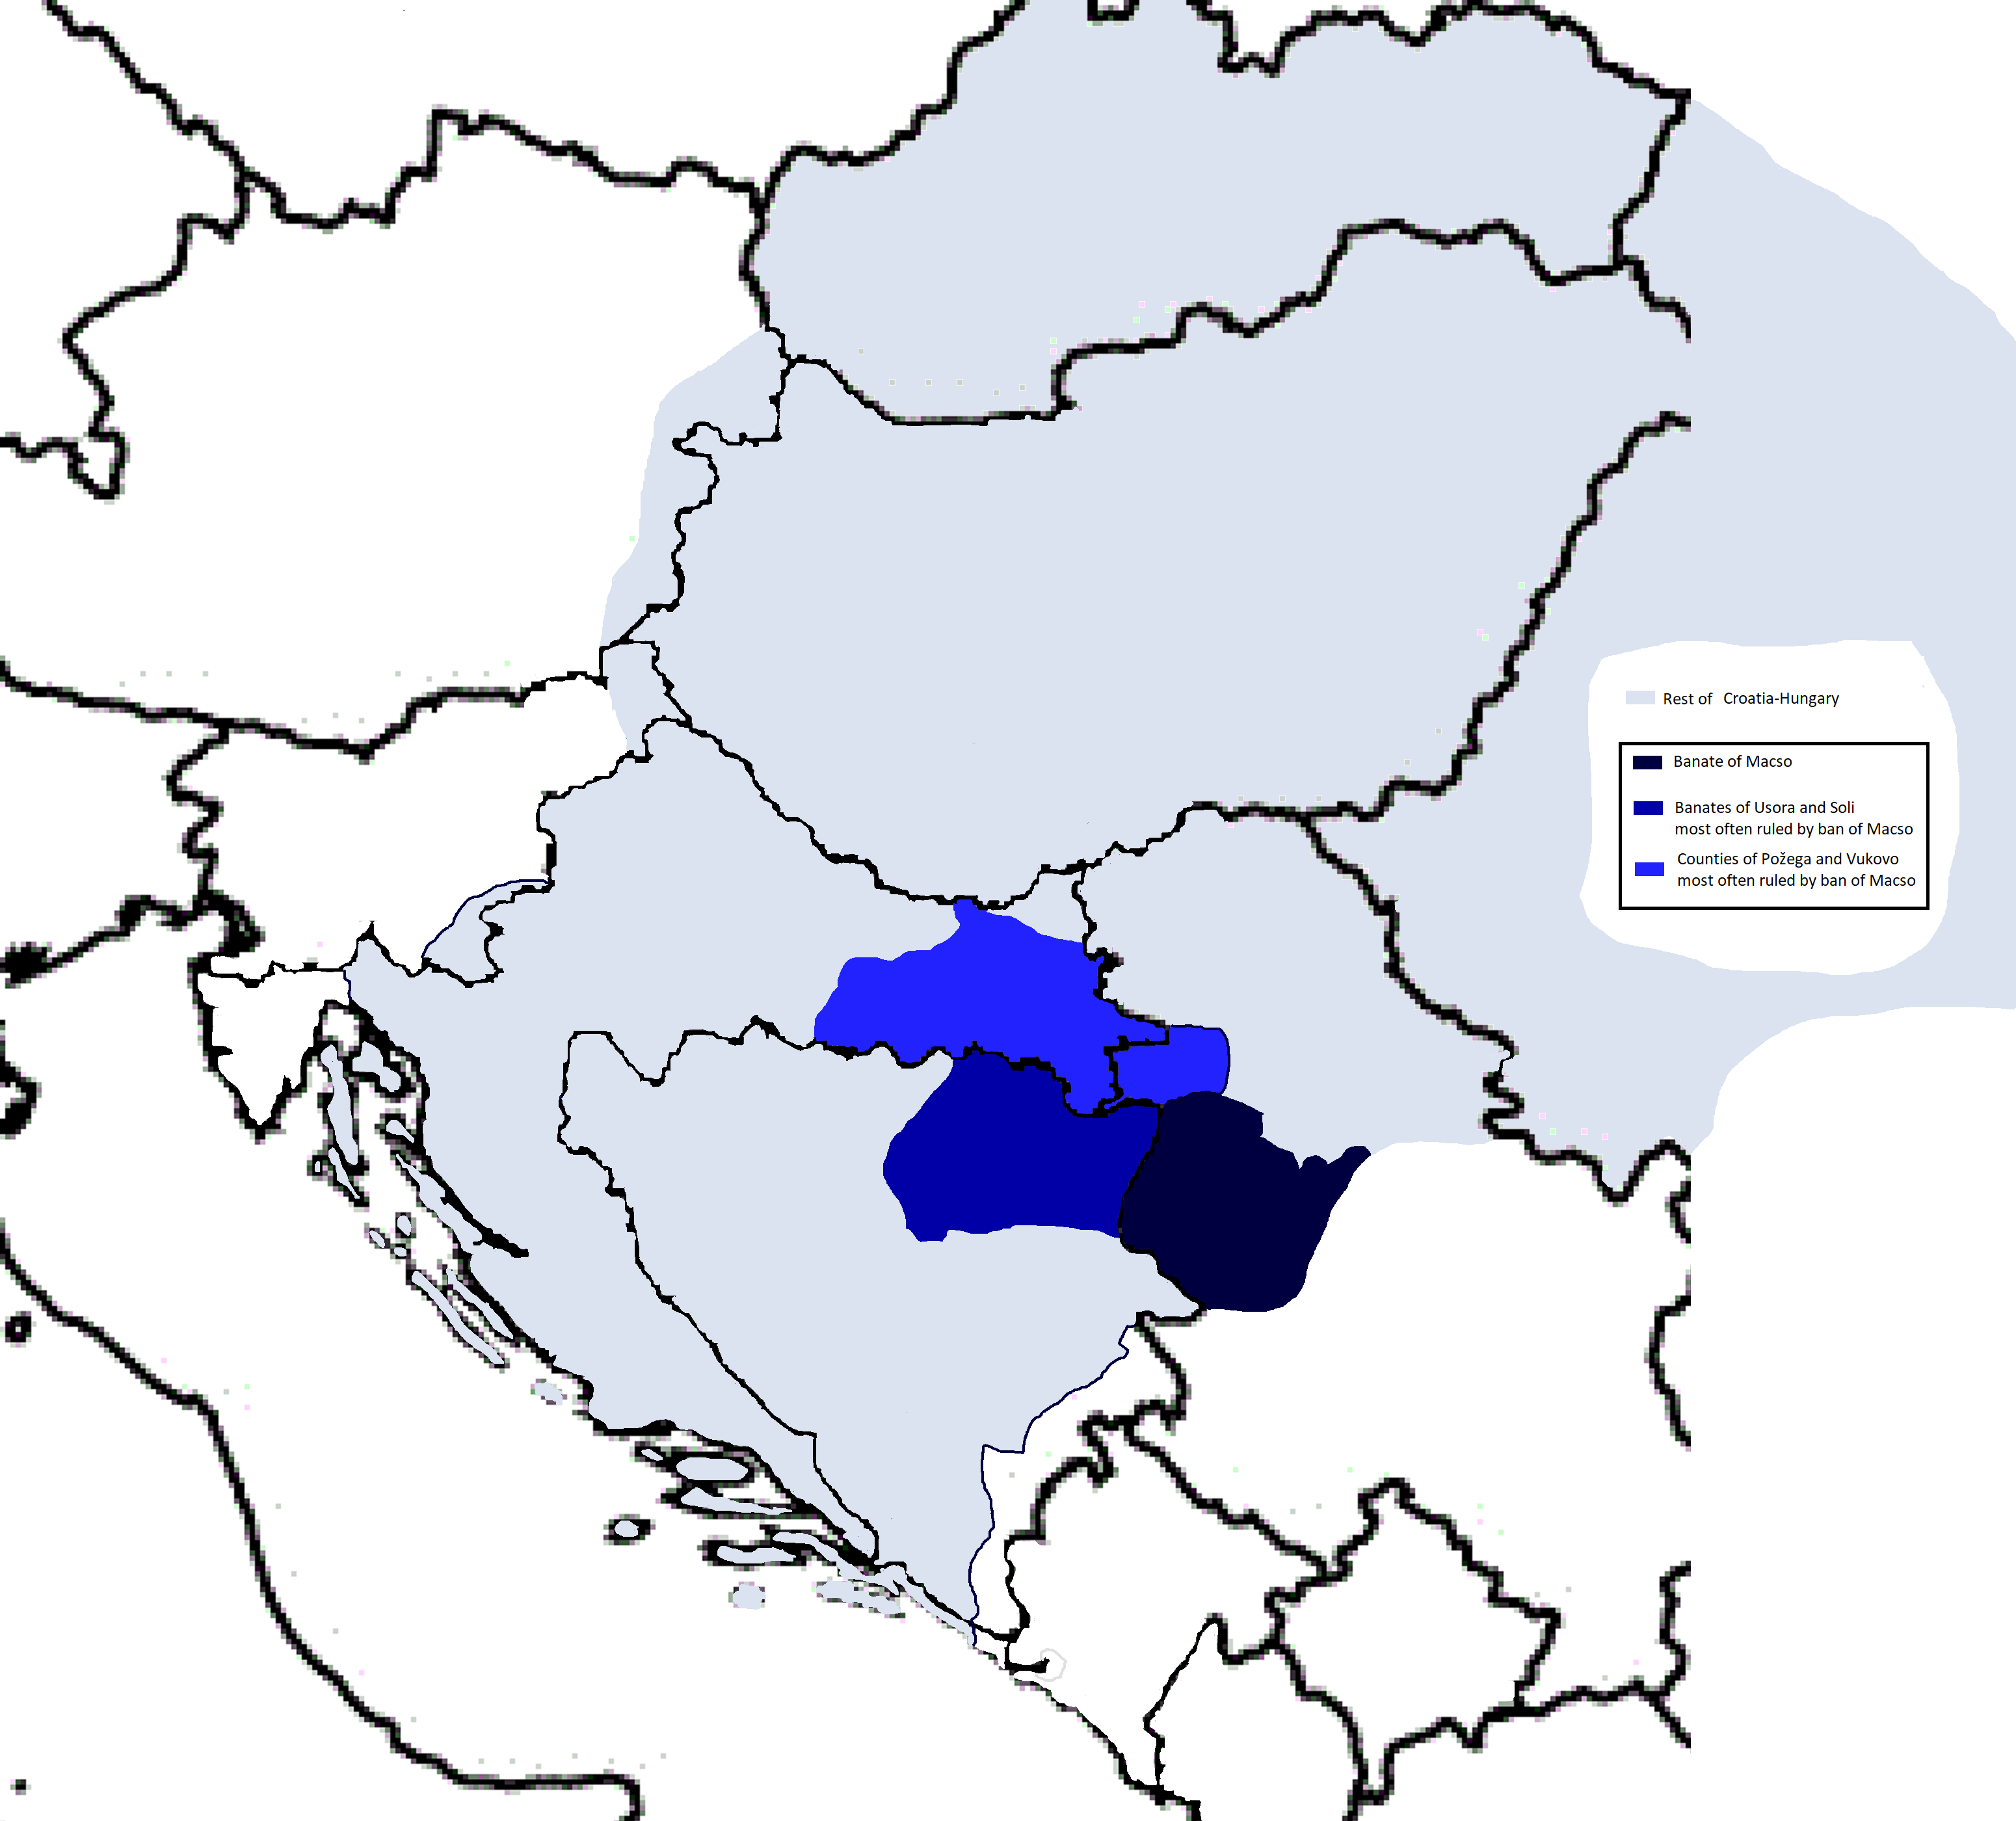 File:Mačvanska banovina.png - Wikimedia Commons